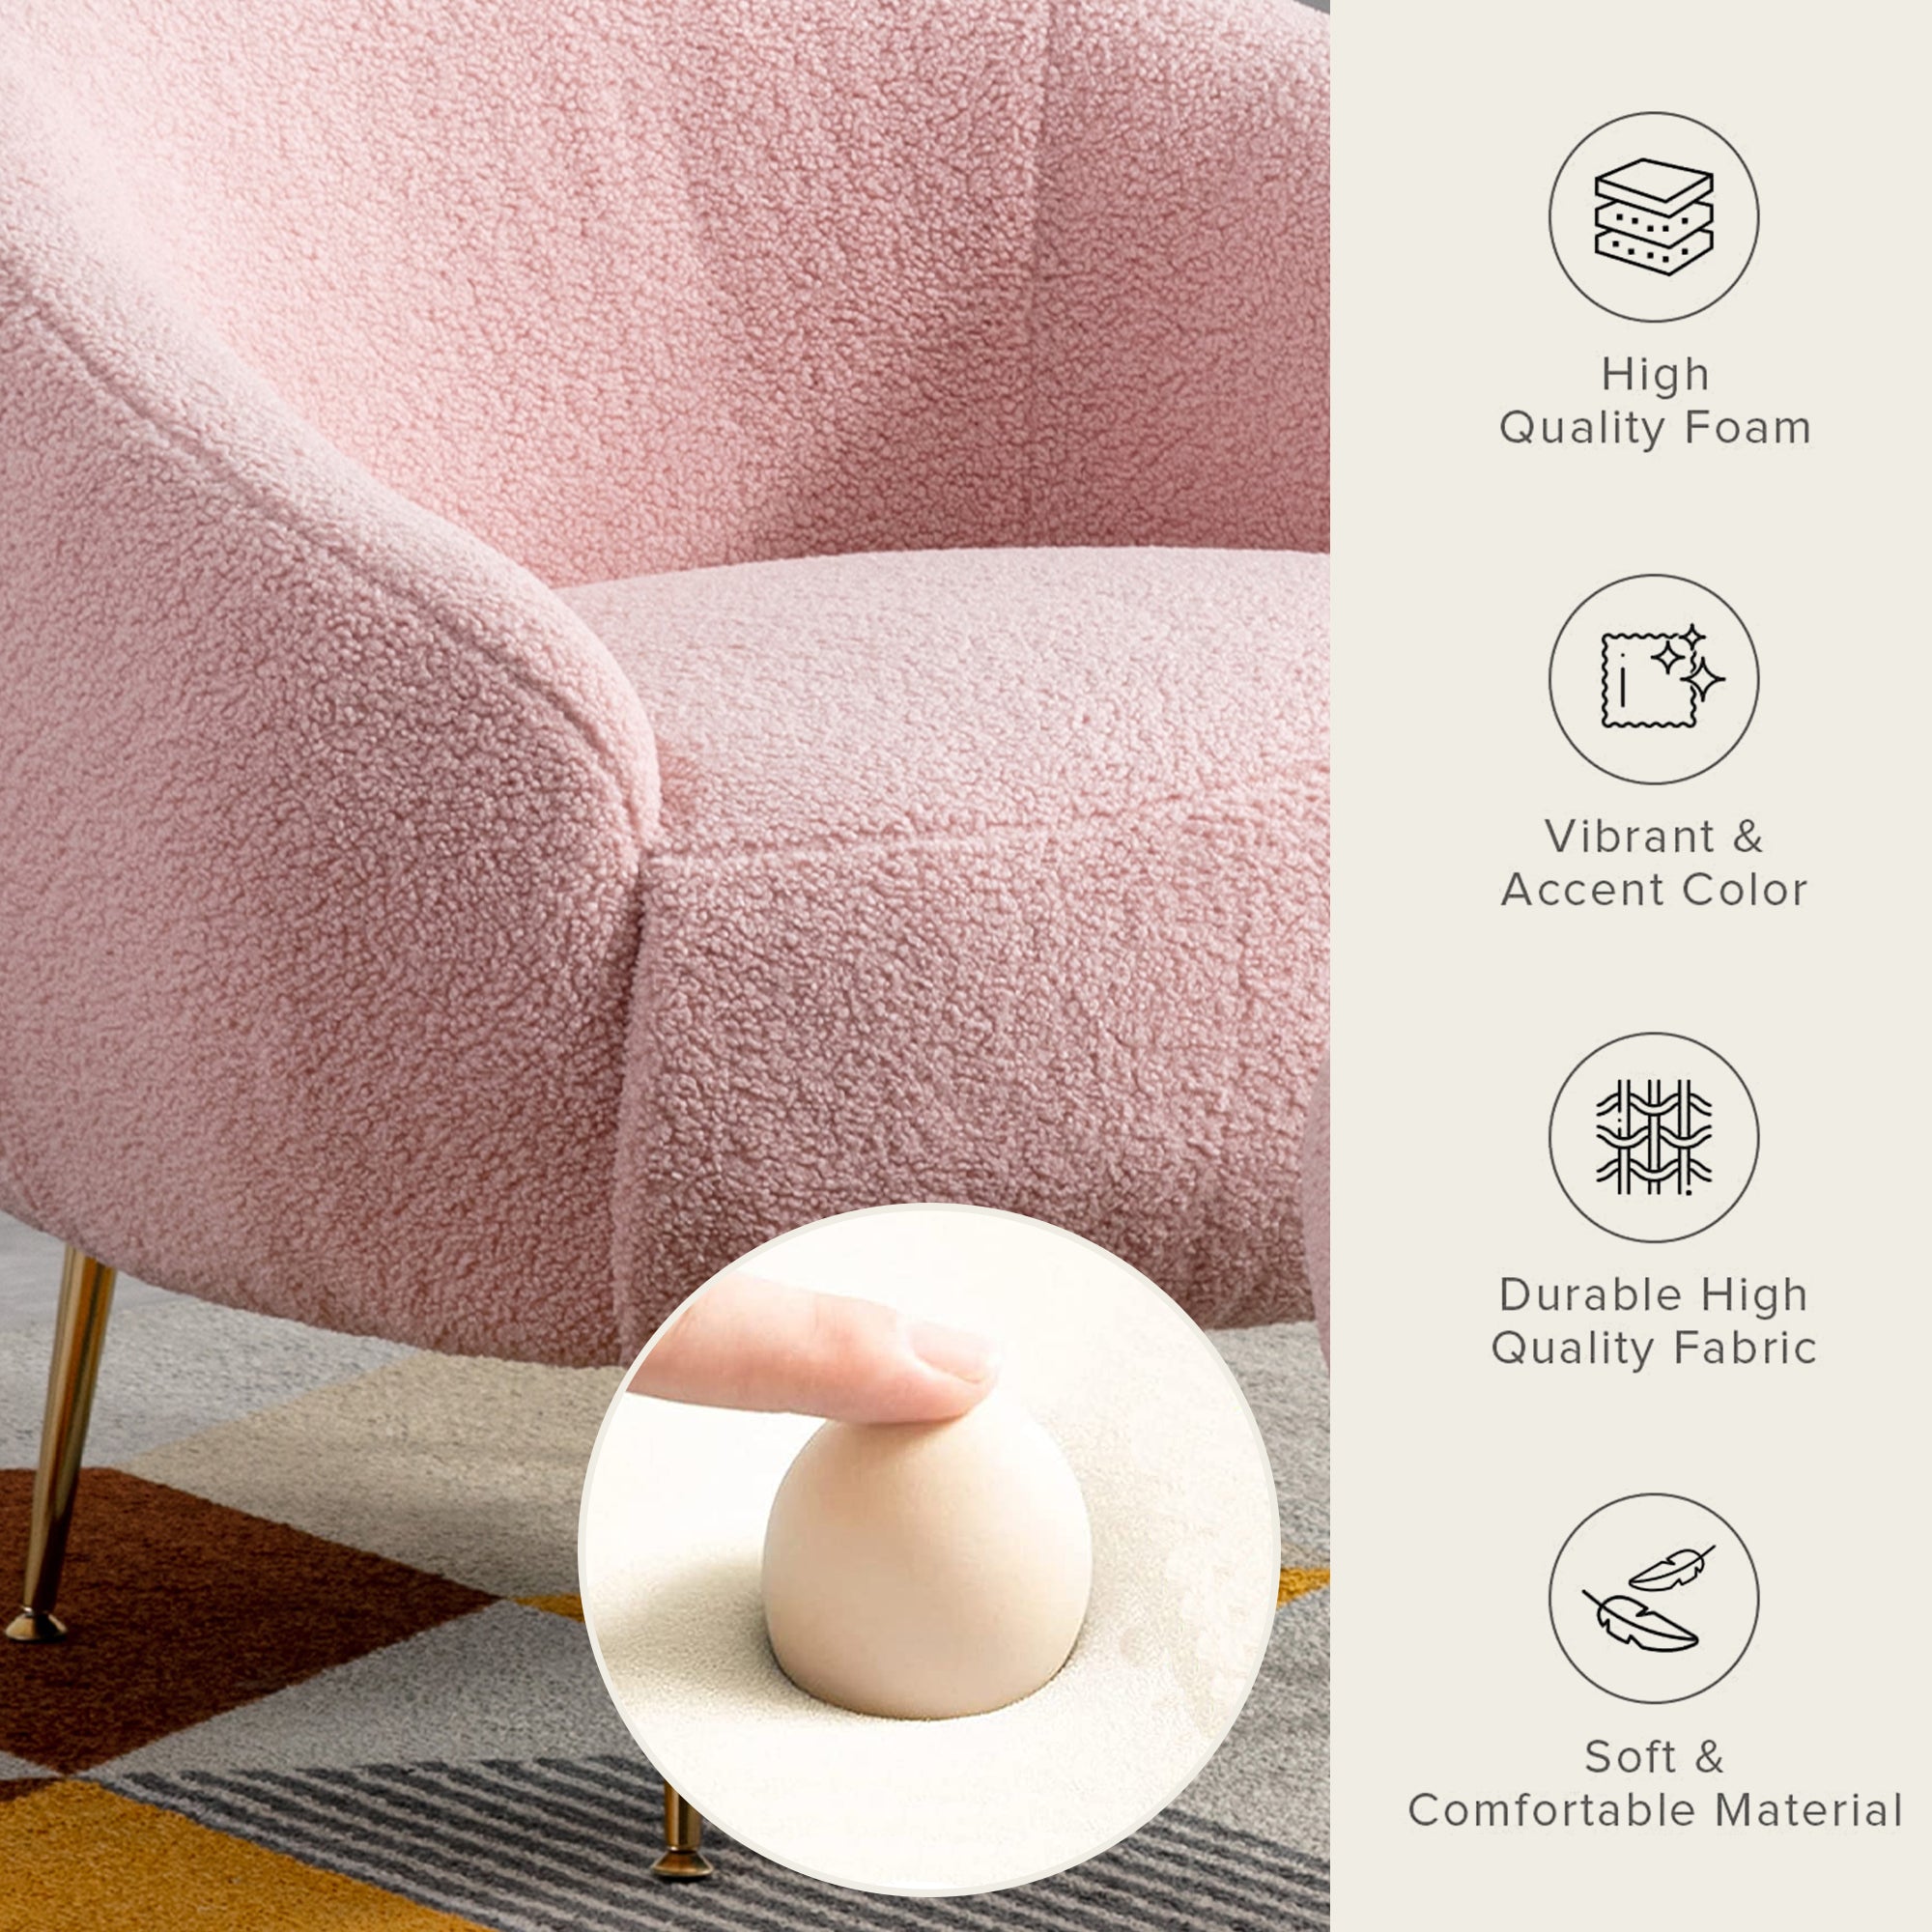 Orisfur. Modern Comfy Leisure Accent Chair, Teddy pink-foam-altay velvet